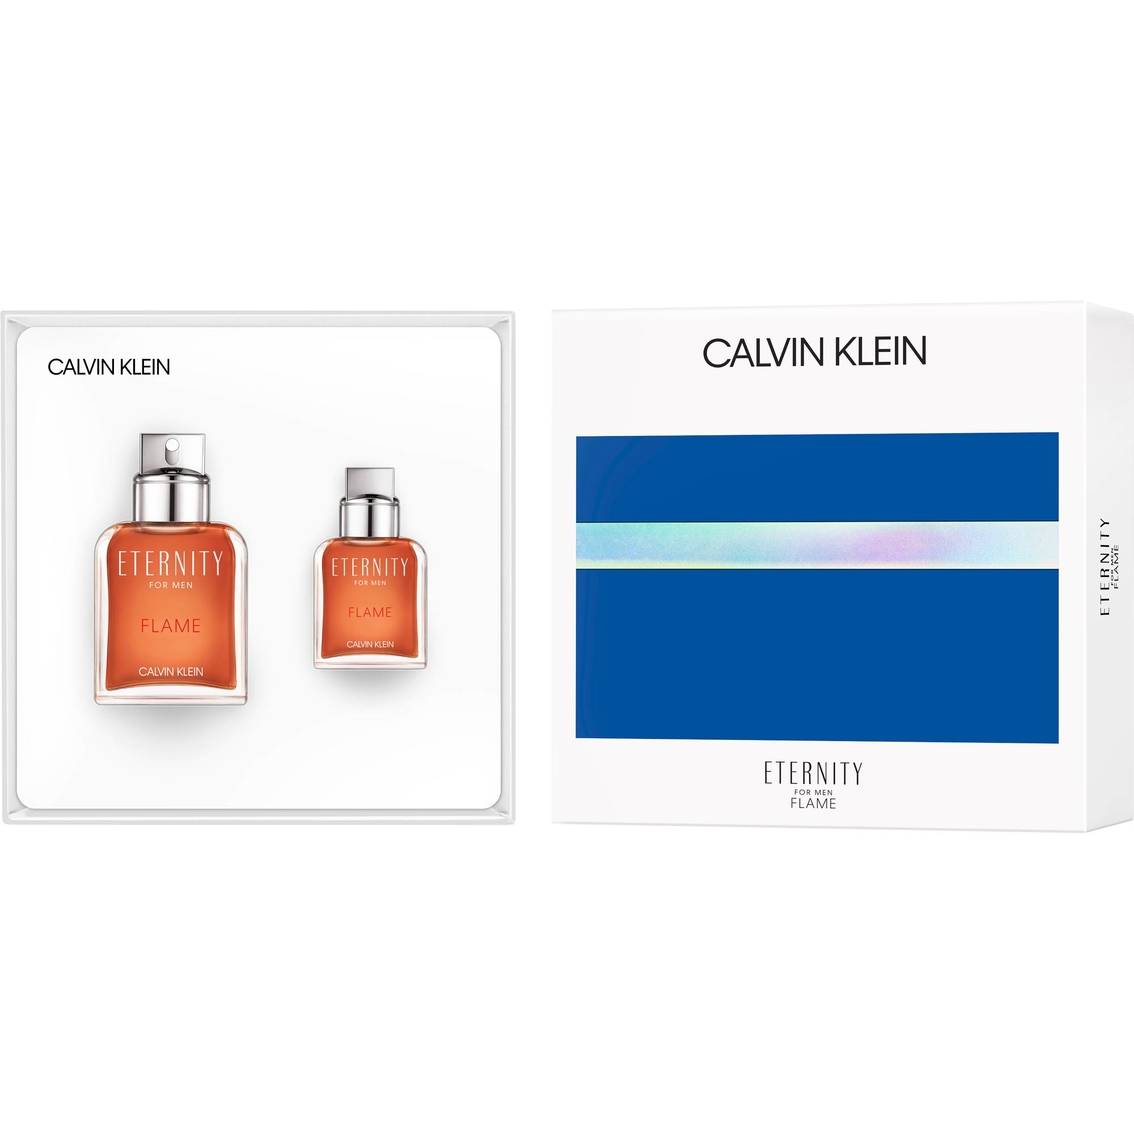 Calvin Klein Eternity Flame Eau De Toilette Gift Set | Gifts Sets For Him |  Beauty & Health | Shop The Exchange